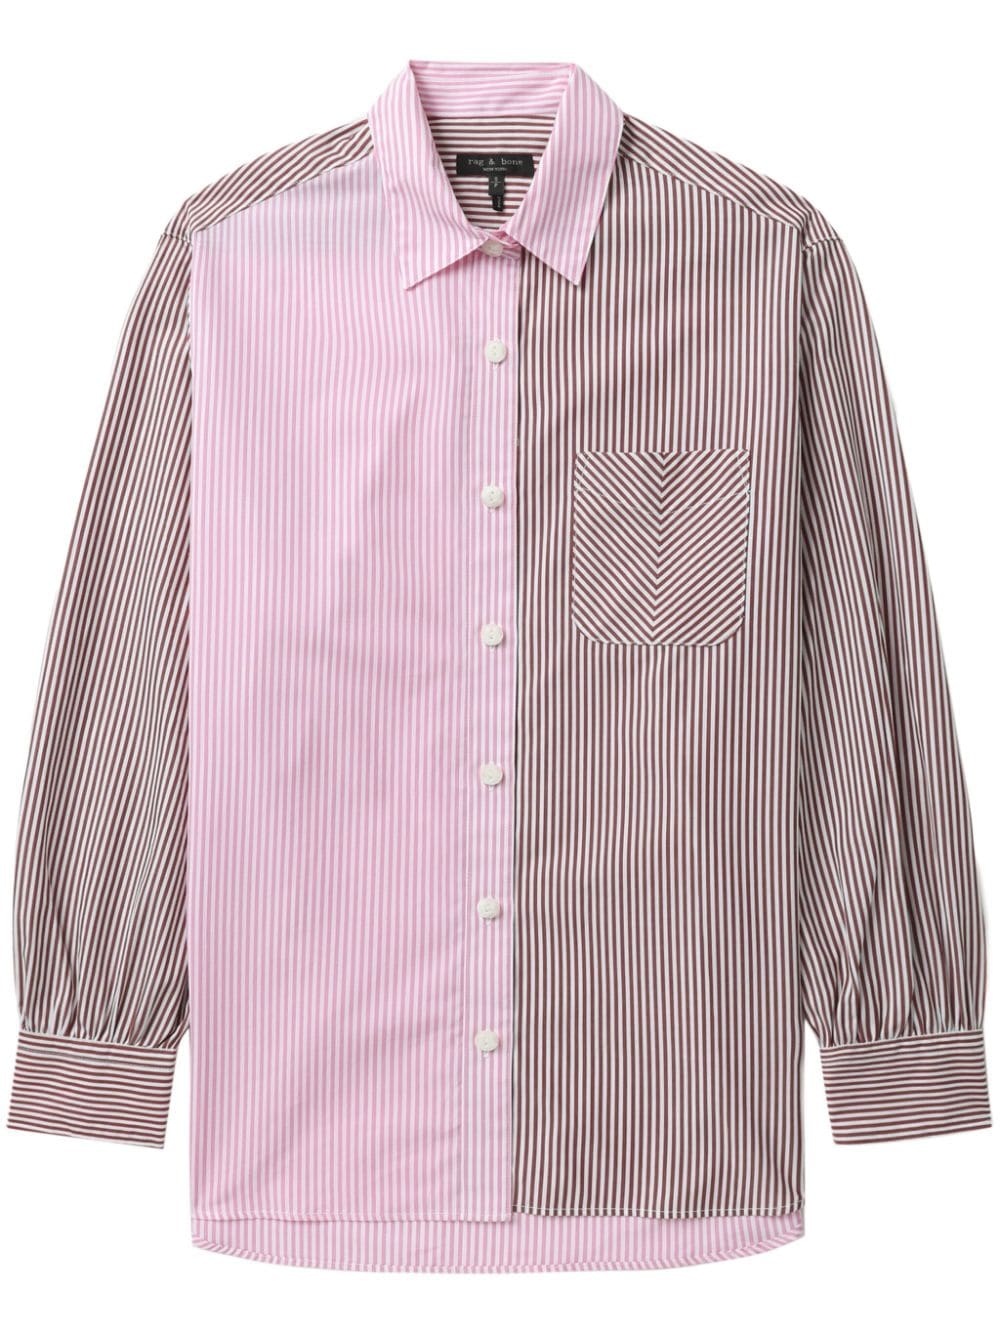 Maxine cotton shirt - 1